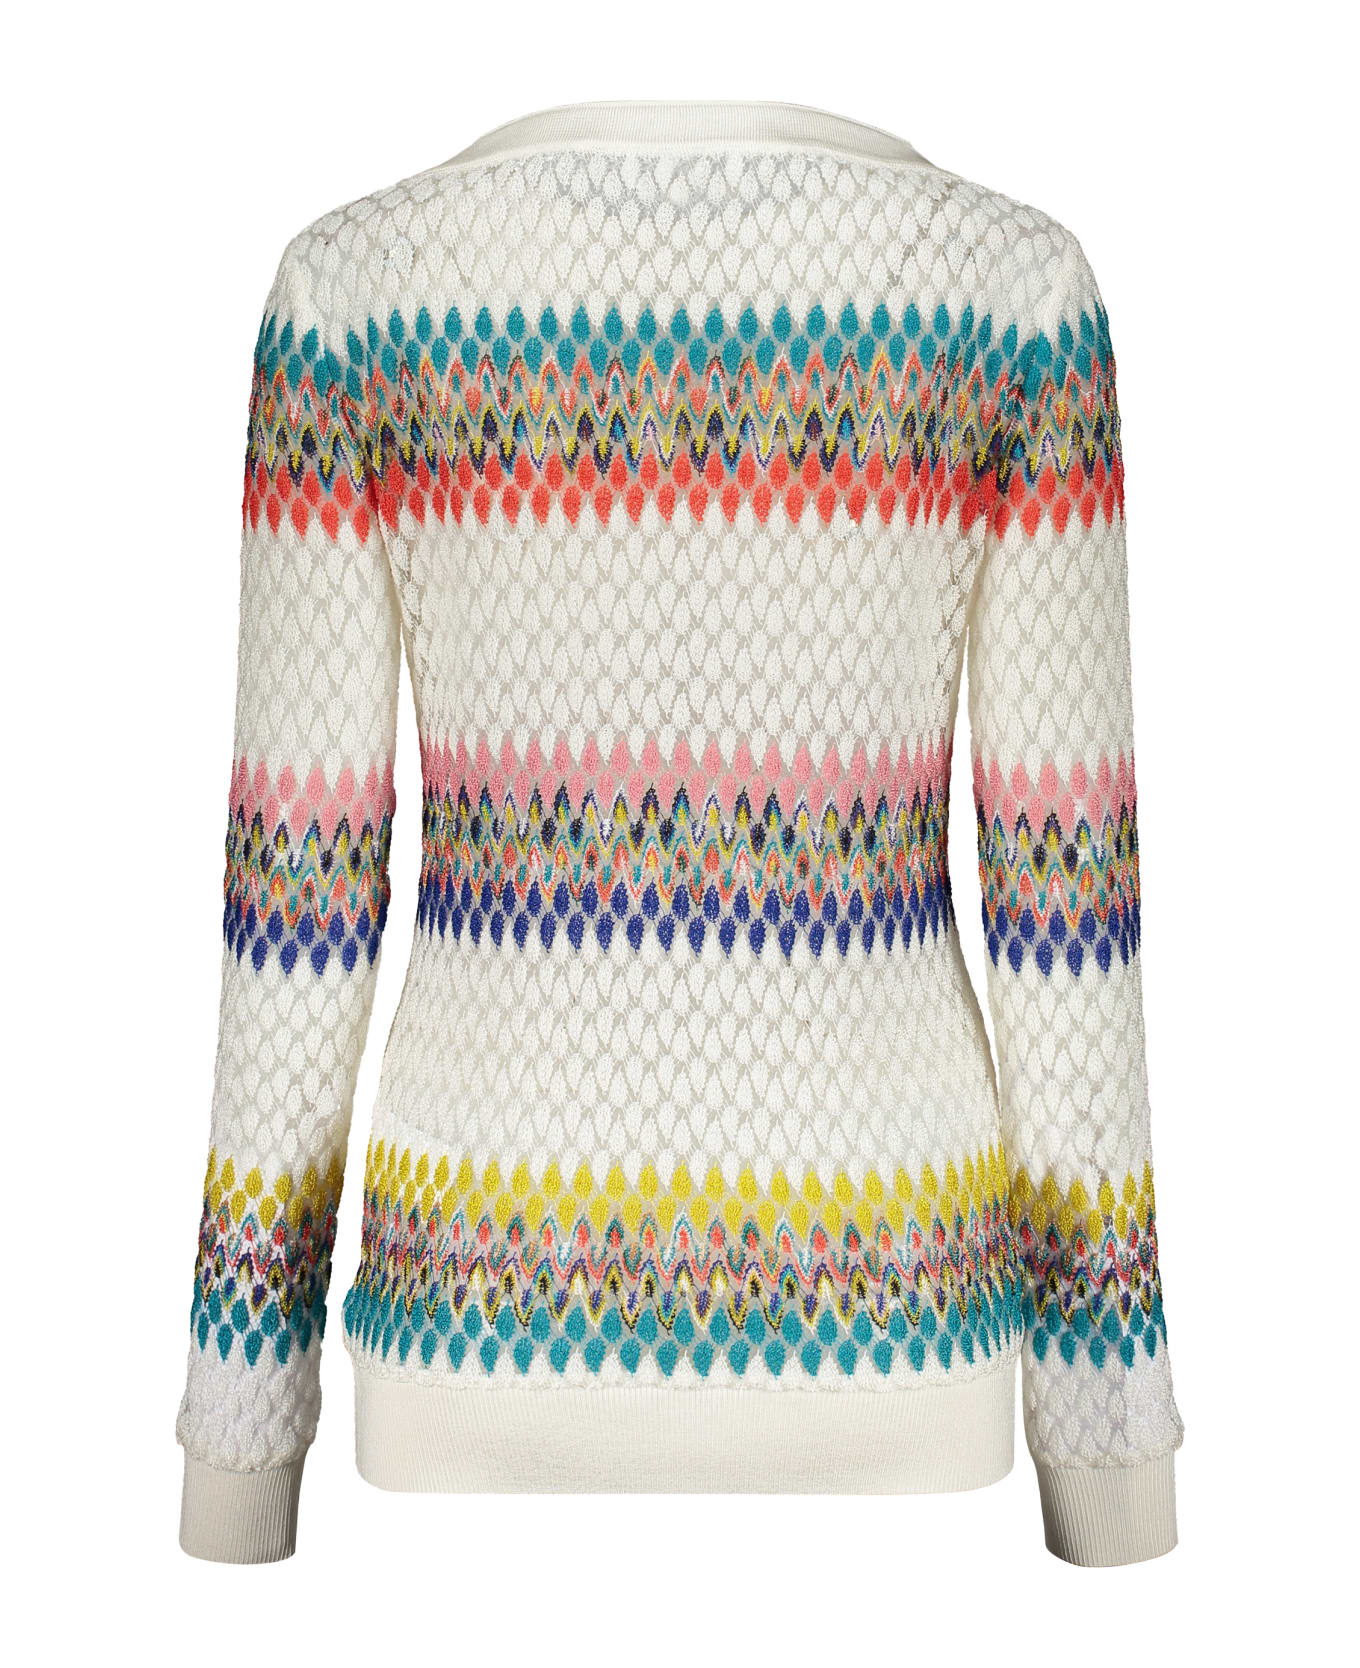 M Missoni Long Sleeve Sweater - Multicolor